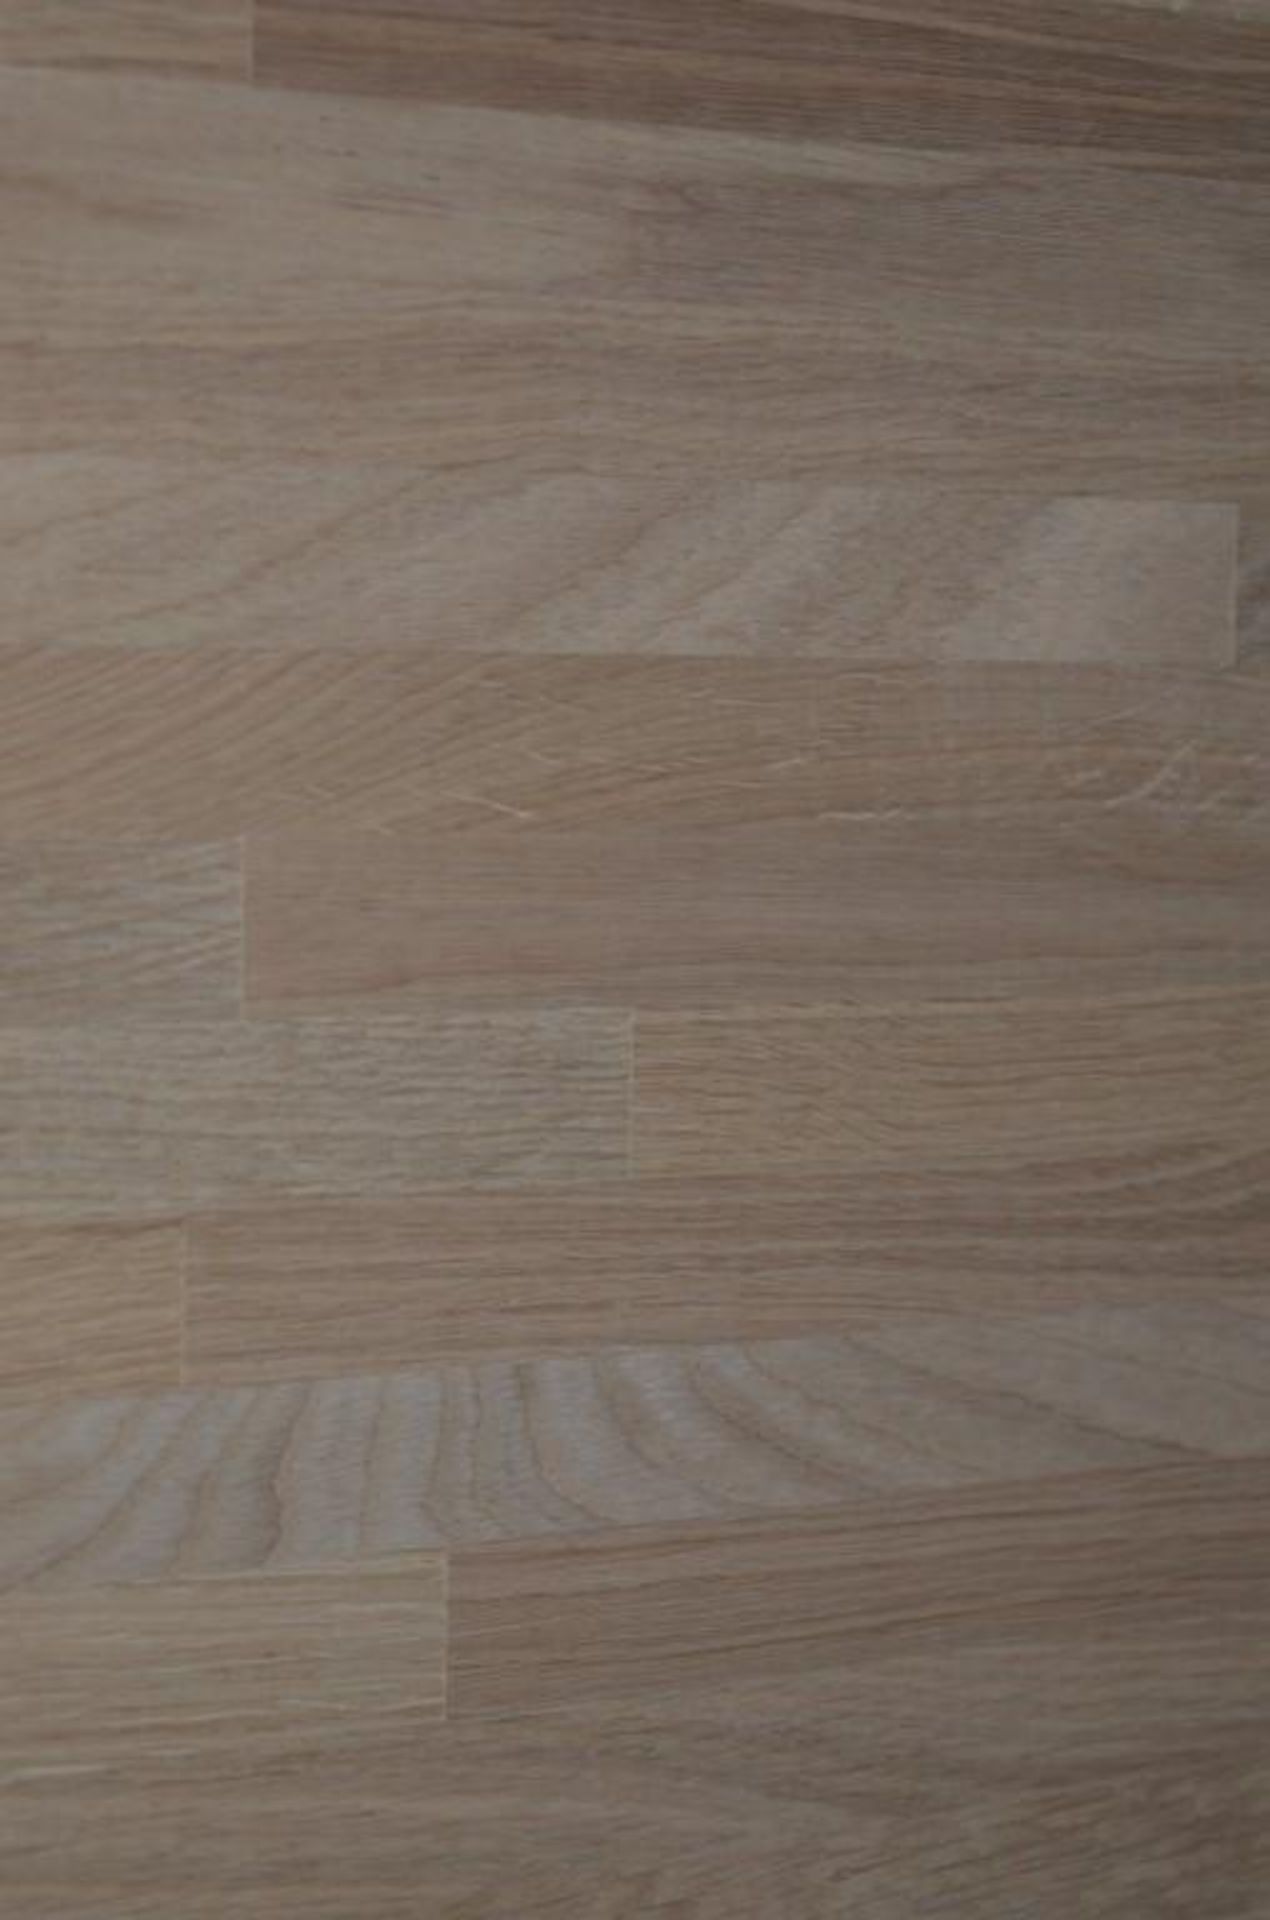 1 x Solid Wood Kitchen Worktop - OAK - Oak Blockwood Kitchen Worktop - Size: 3000 x 900 x 32mm - - Image 2 of 3